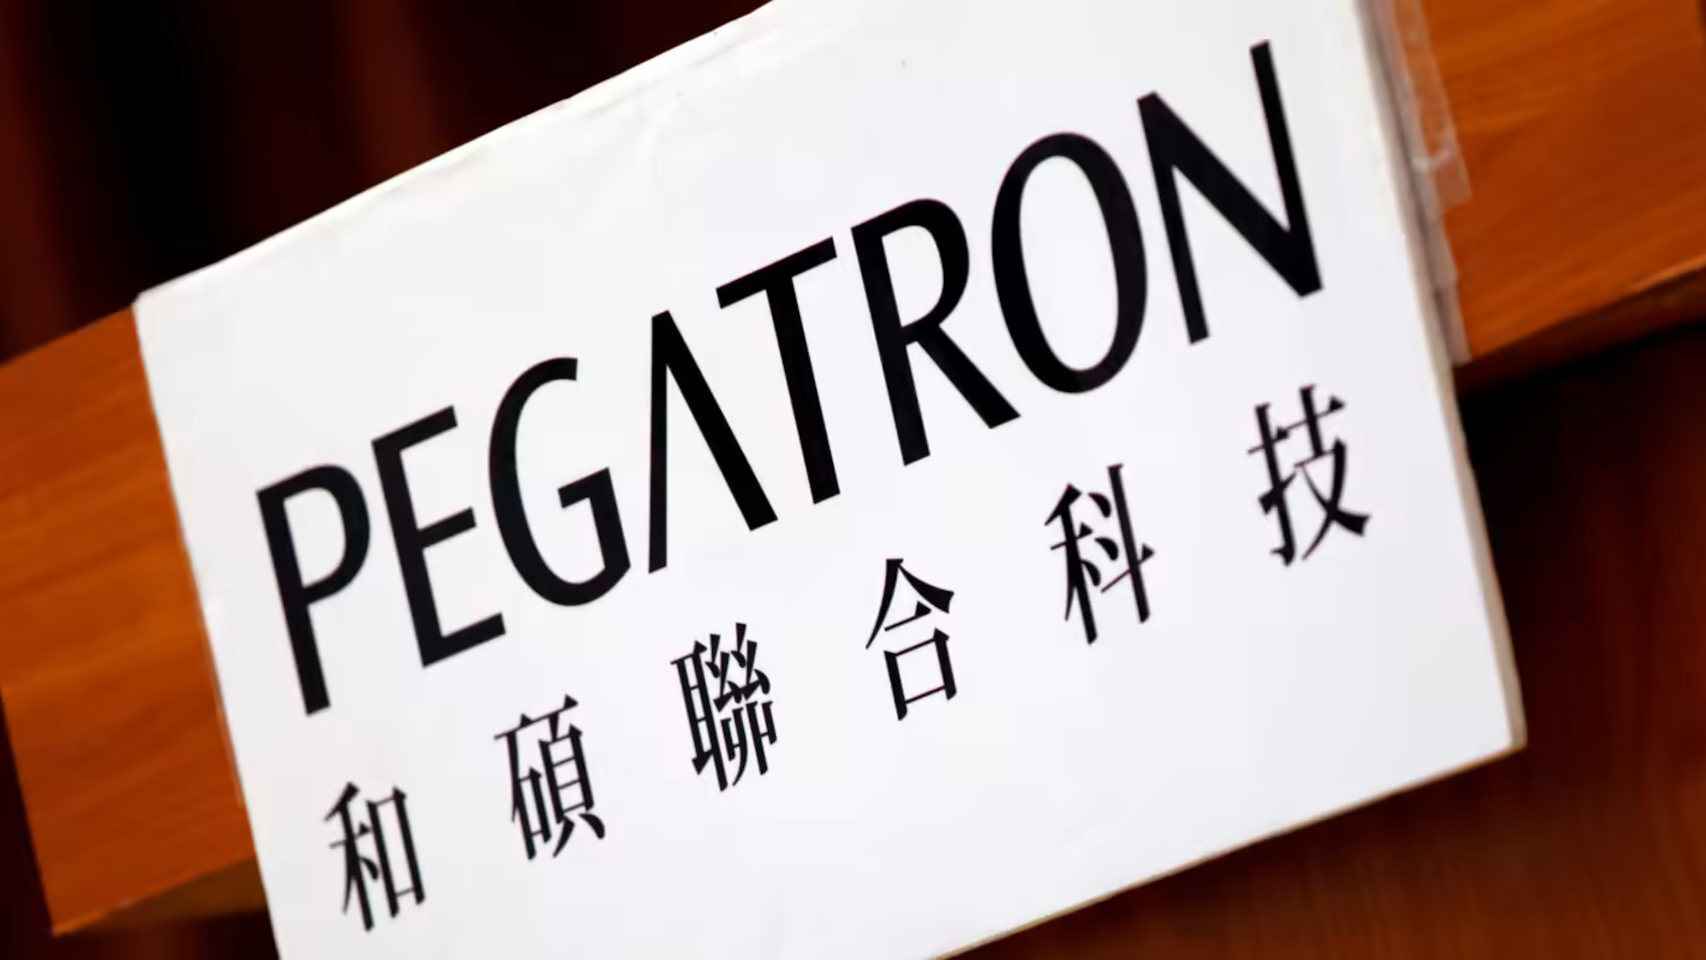 Pegatron, fabricante de componentes